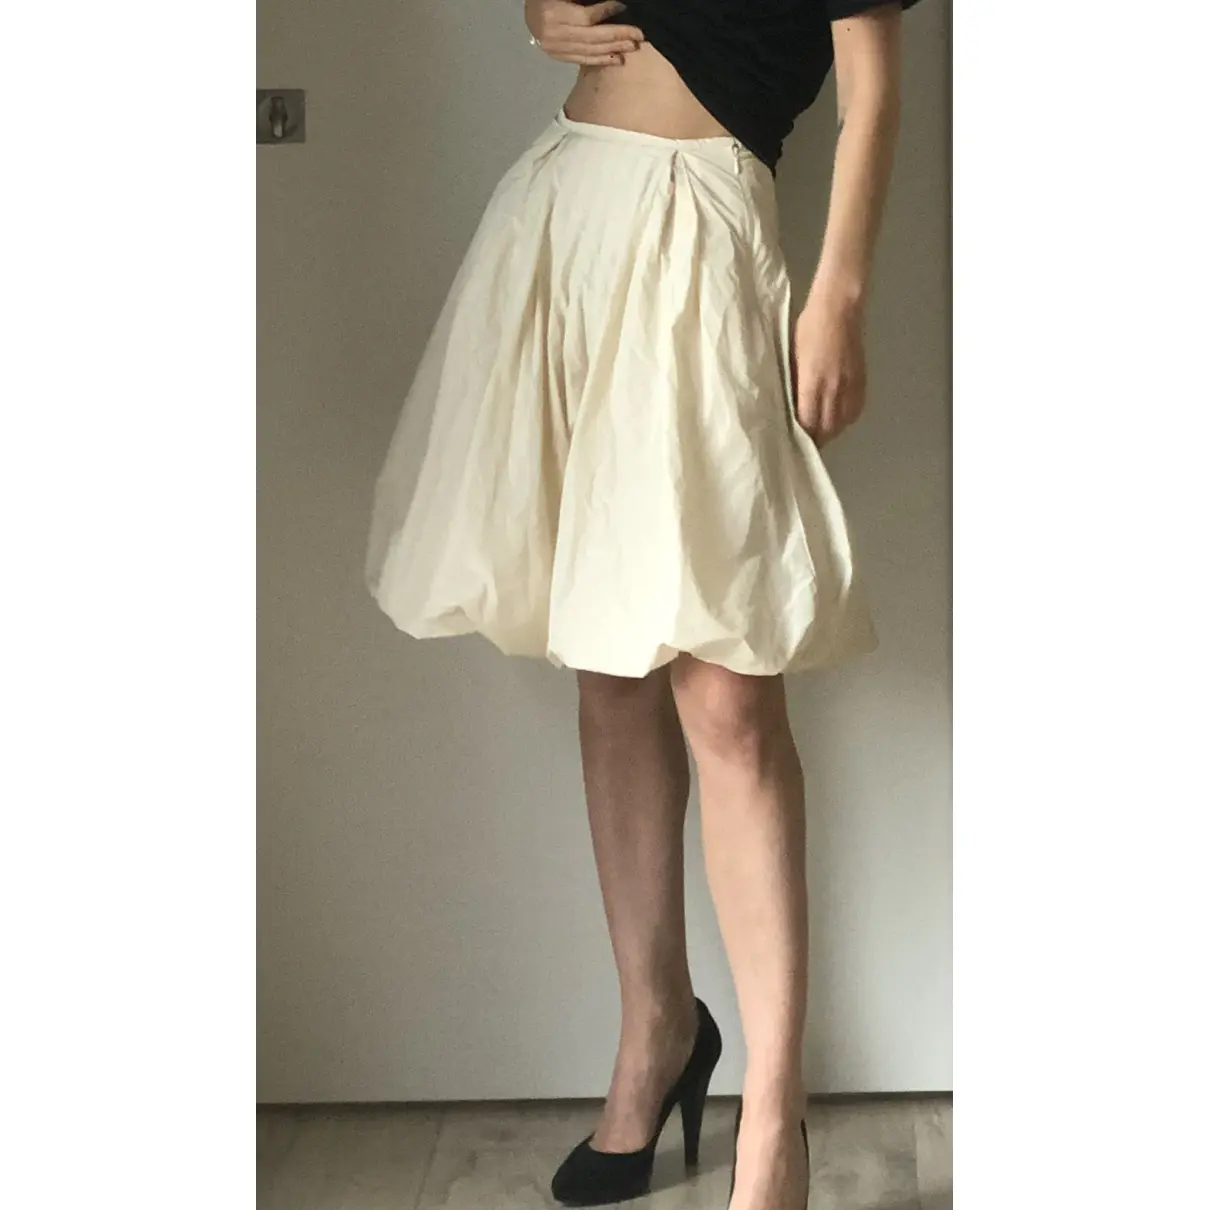 Mid-length skirt Max & Co